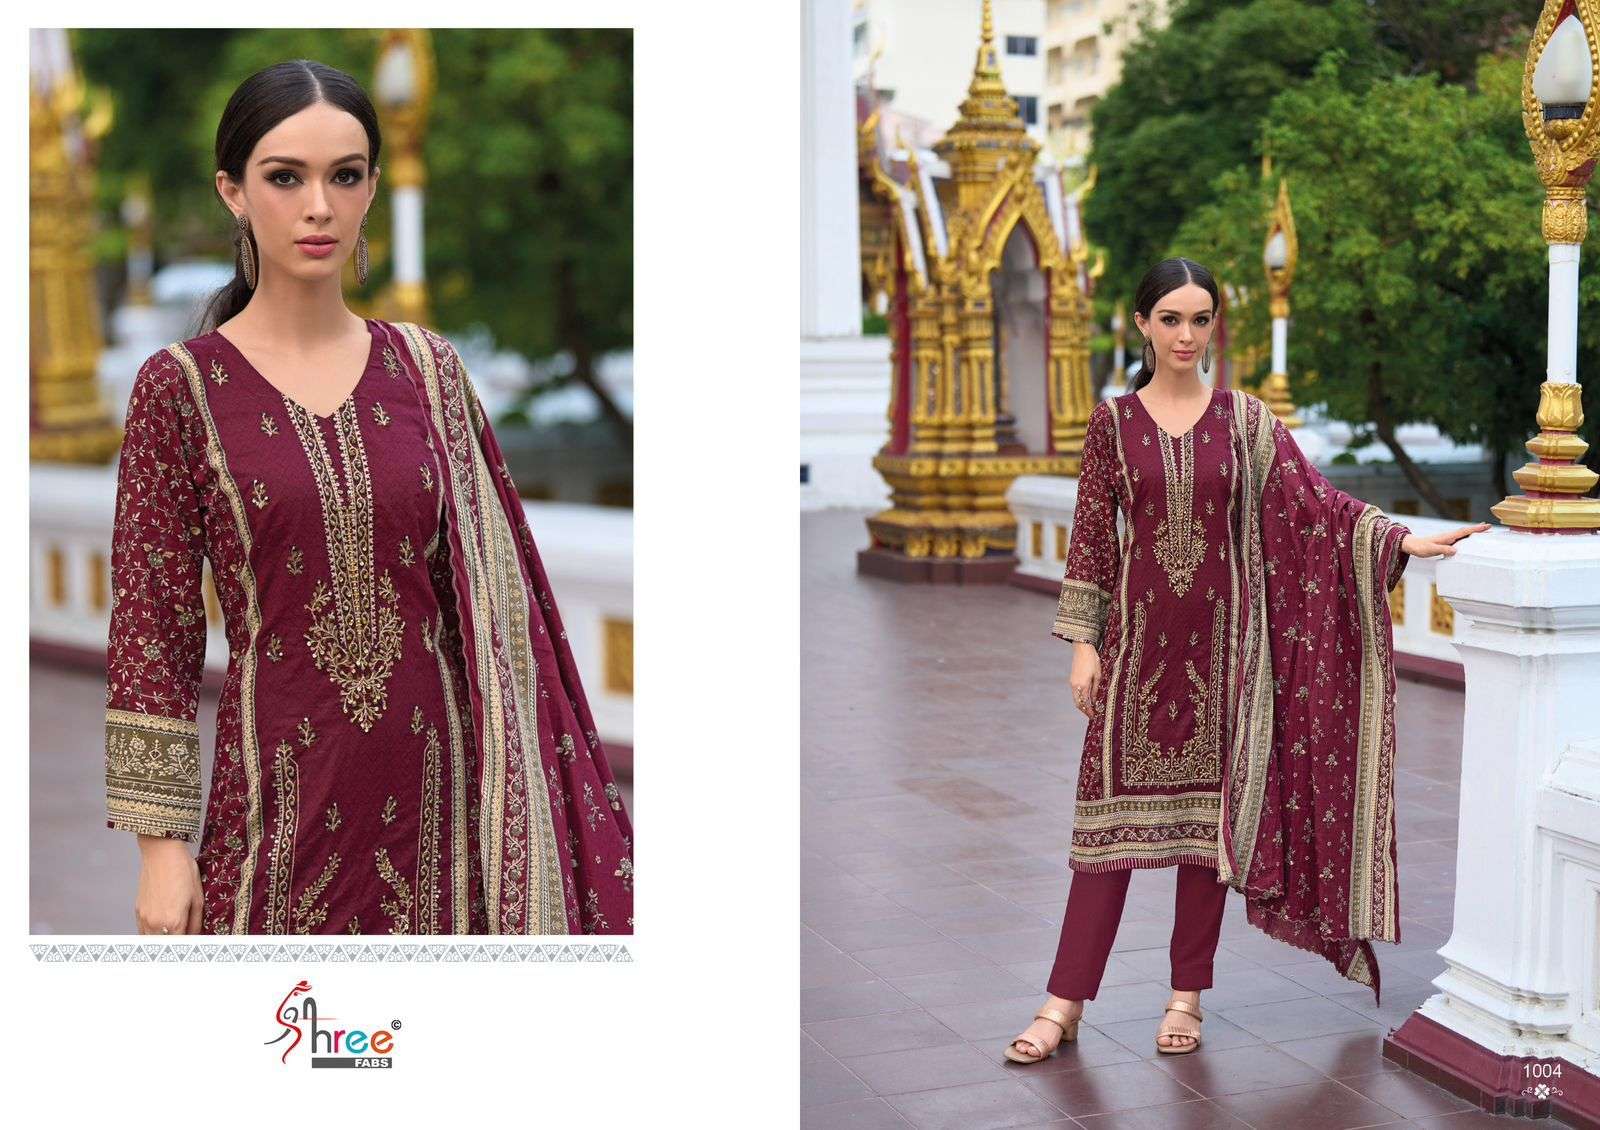 shree fabs riwayat premium embrodered lawn collection gorgeous shiffon dupatta look salwar suit catalog